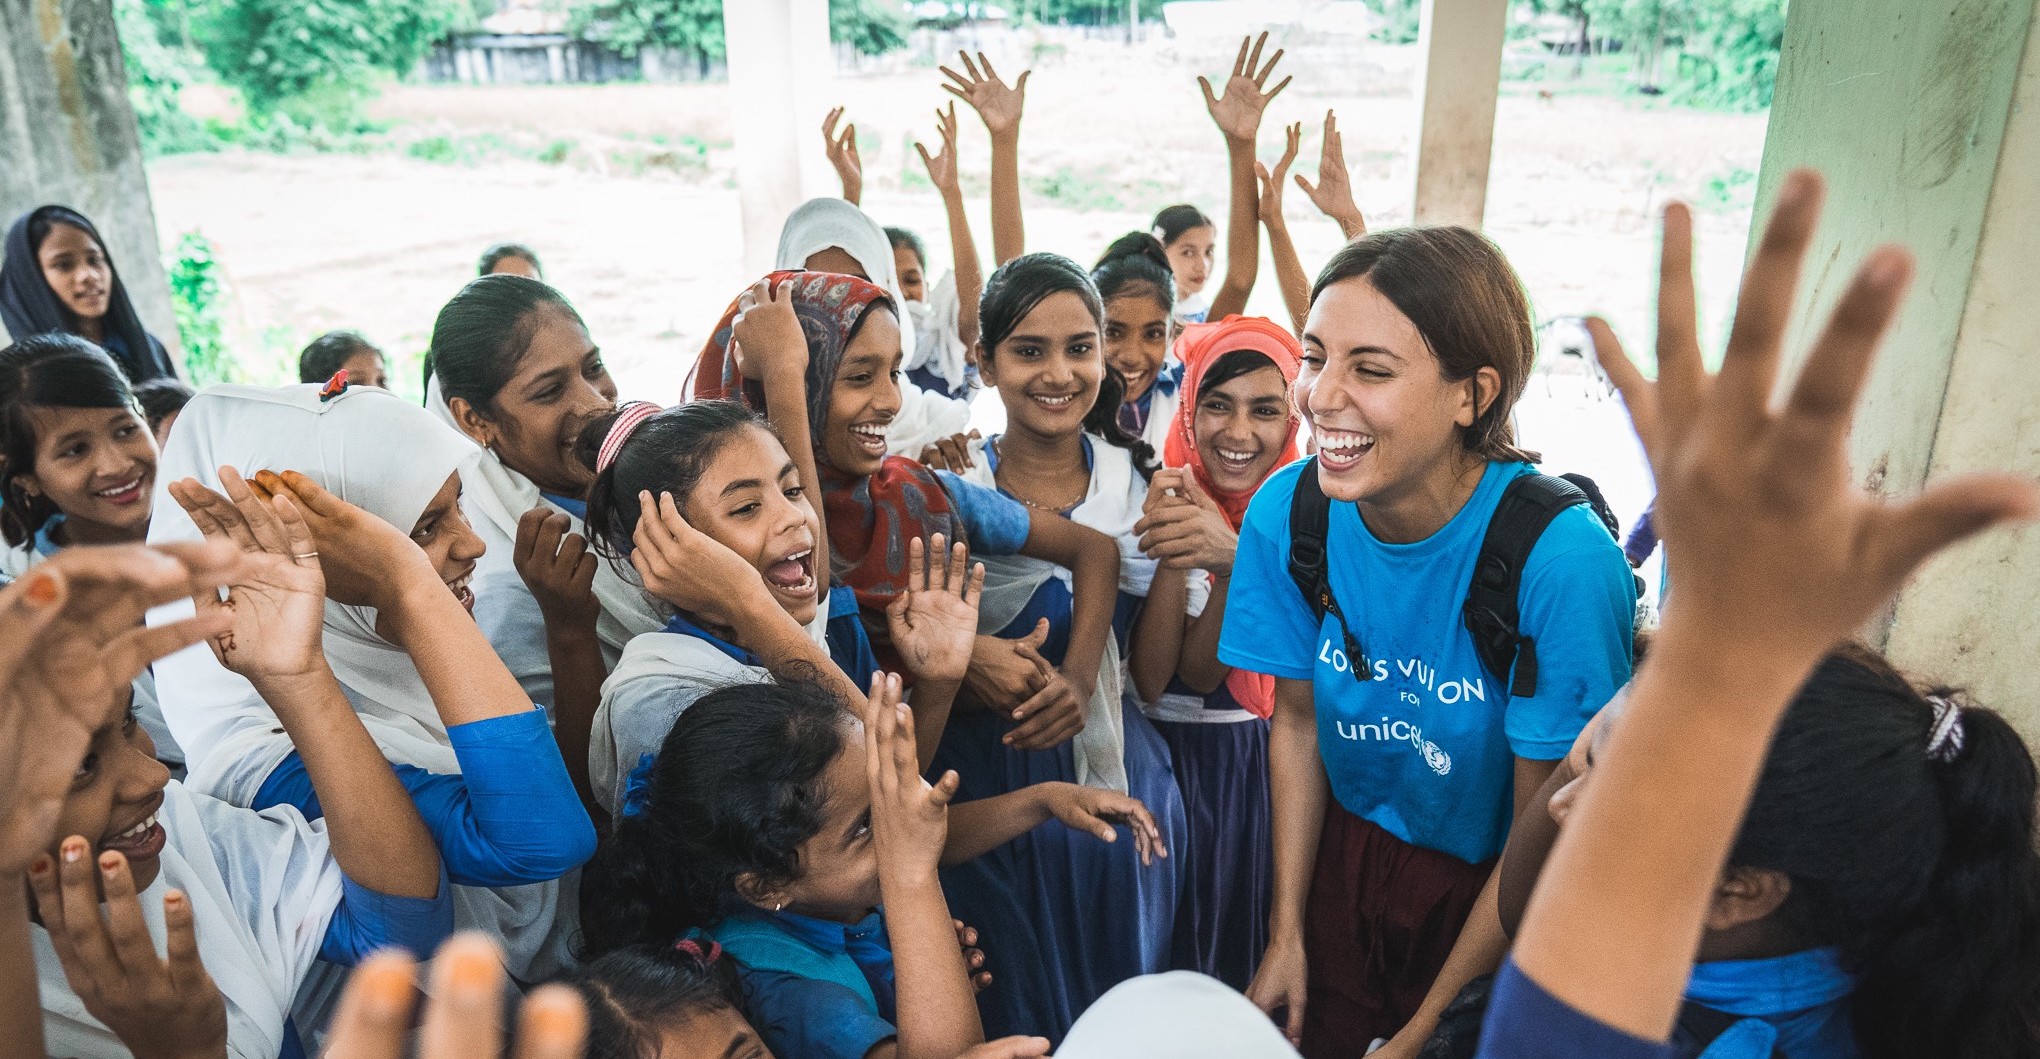 Louis Vuitton & UNICEF's Partnership: Promising a Better Future for  Children